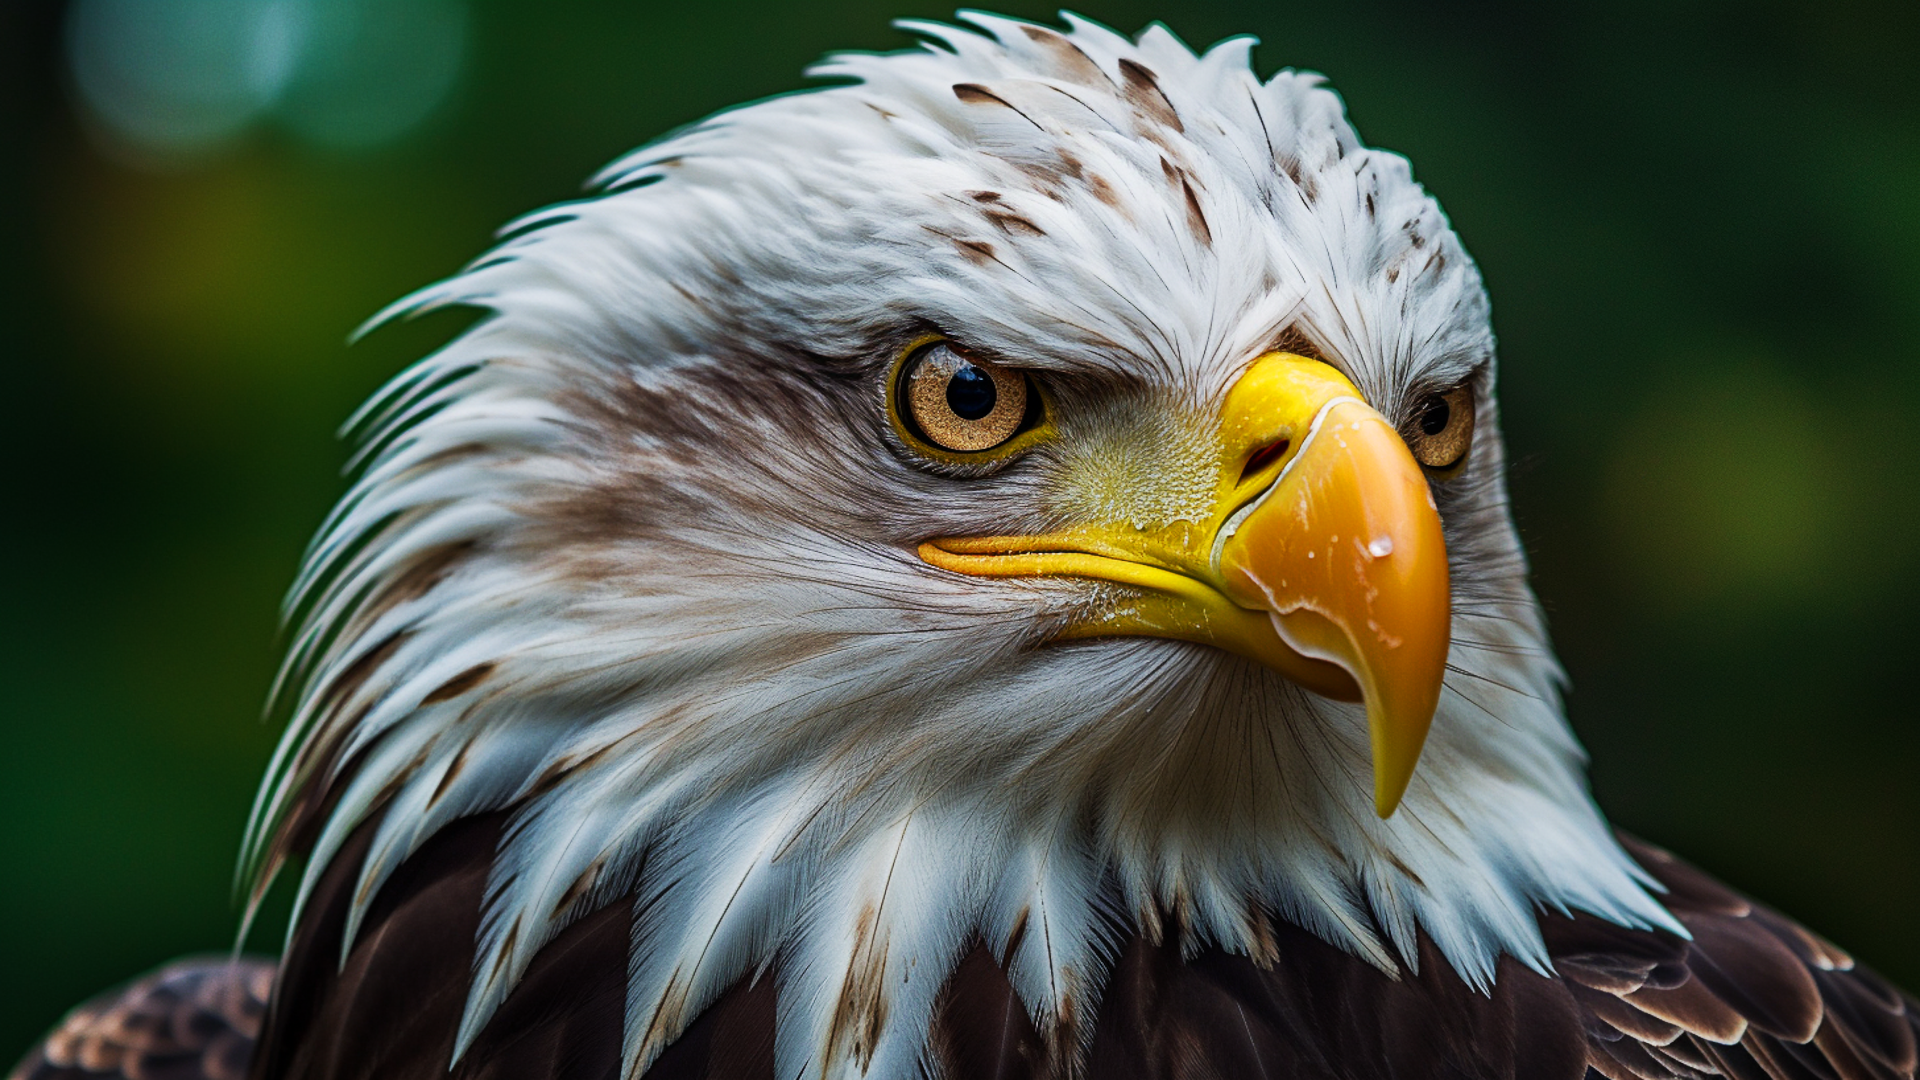 General 1920x1080 eagle AI art bald eagle bird of prey animals closeup blurred blurry background